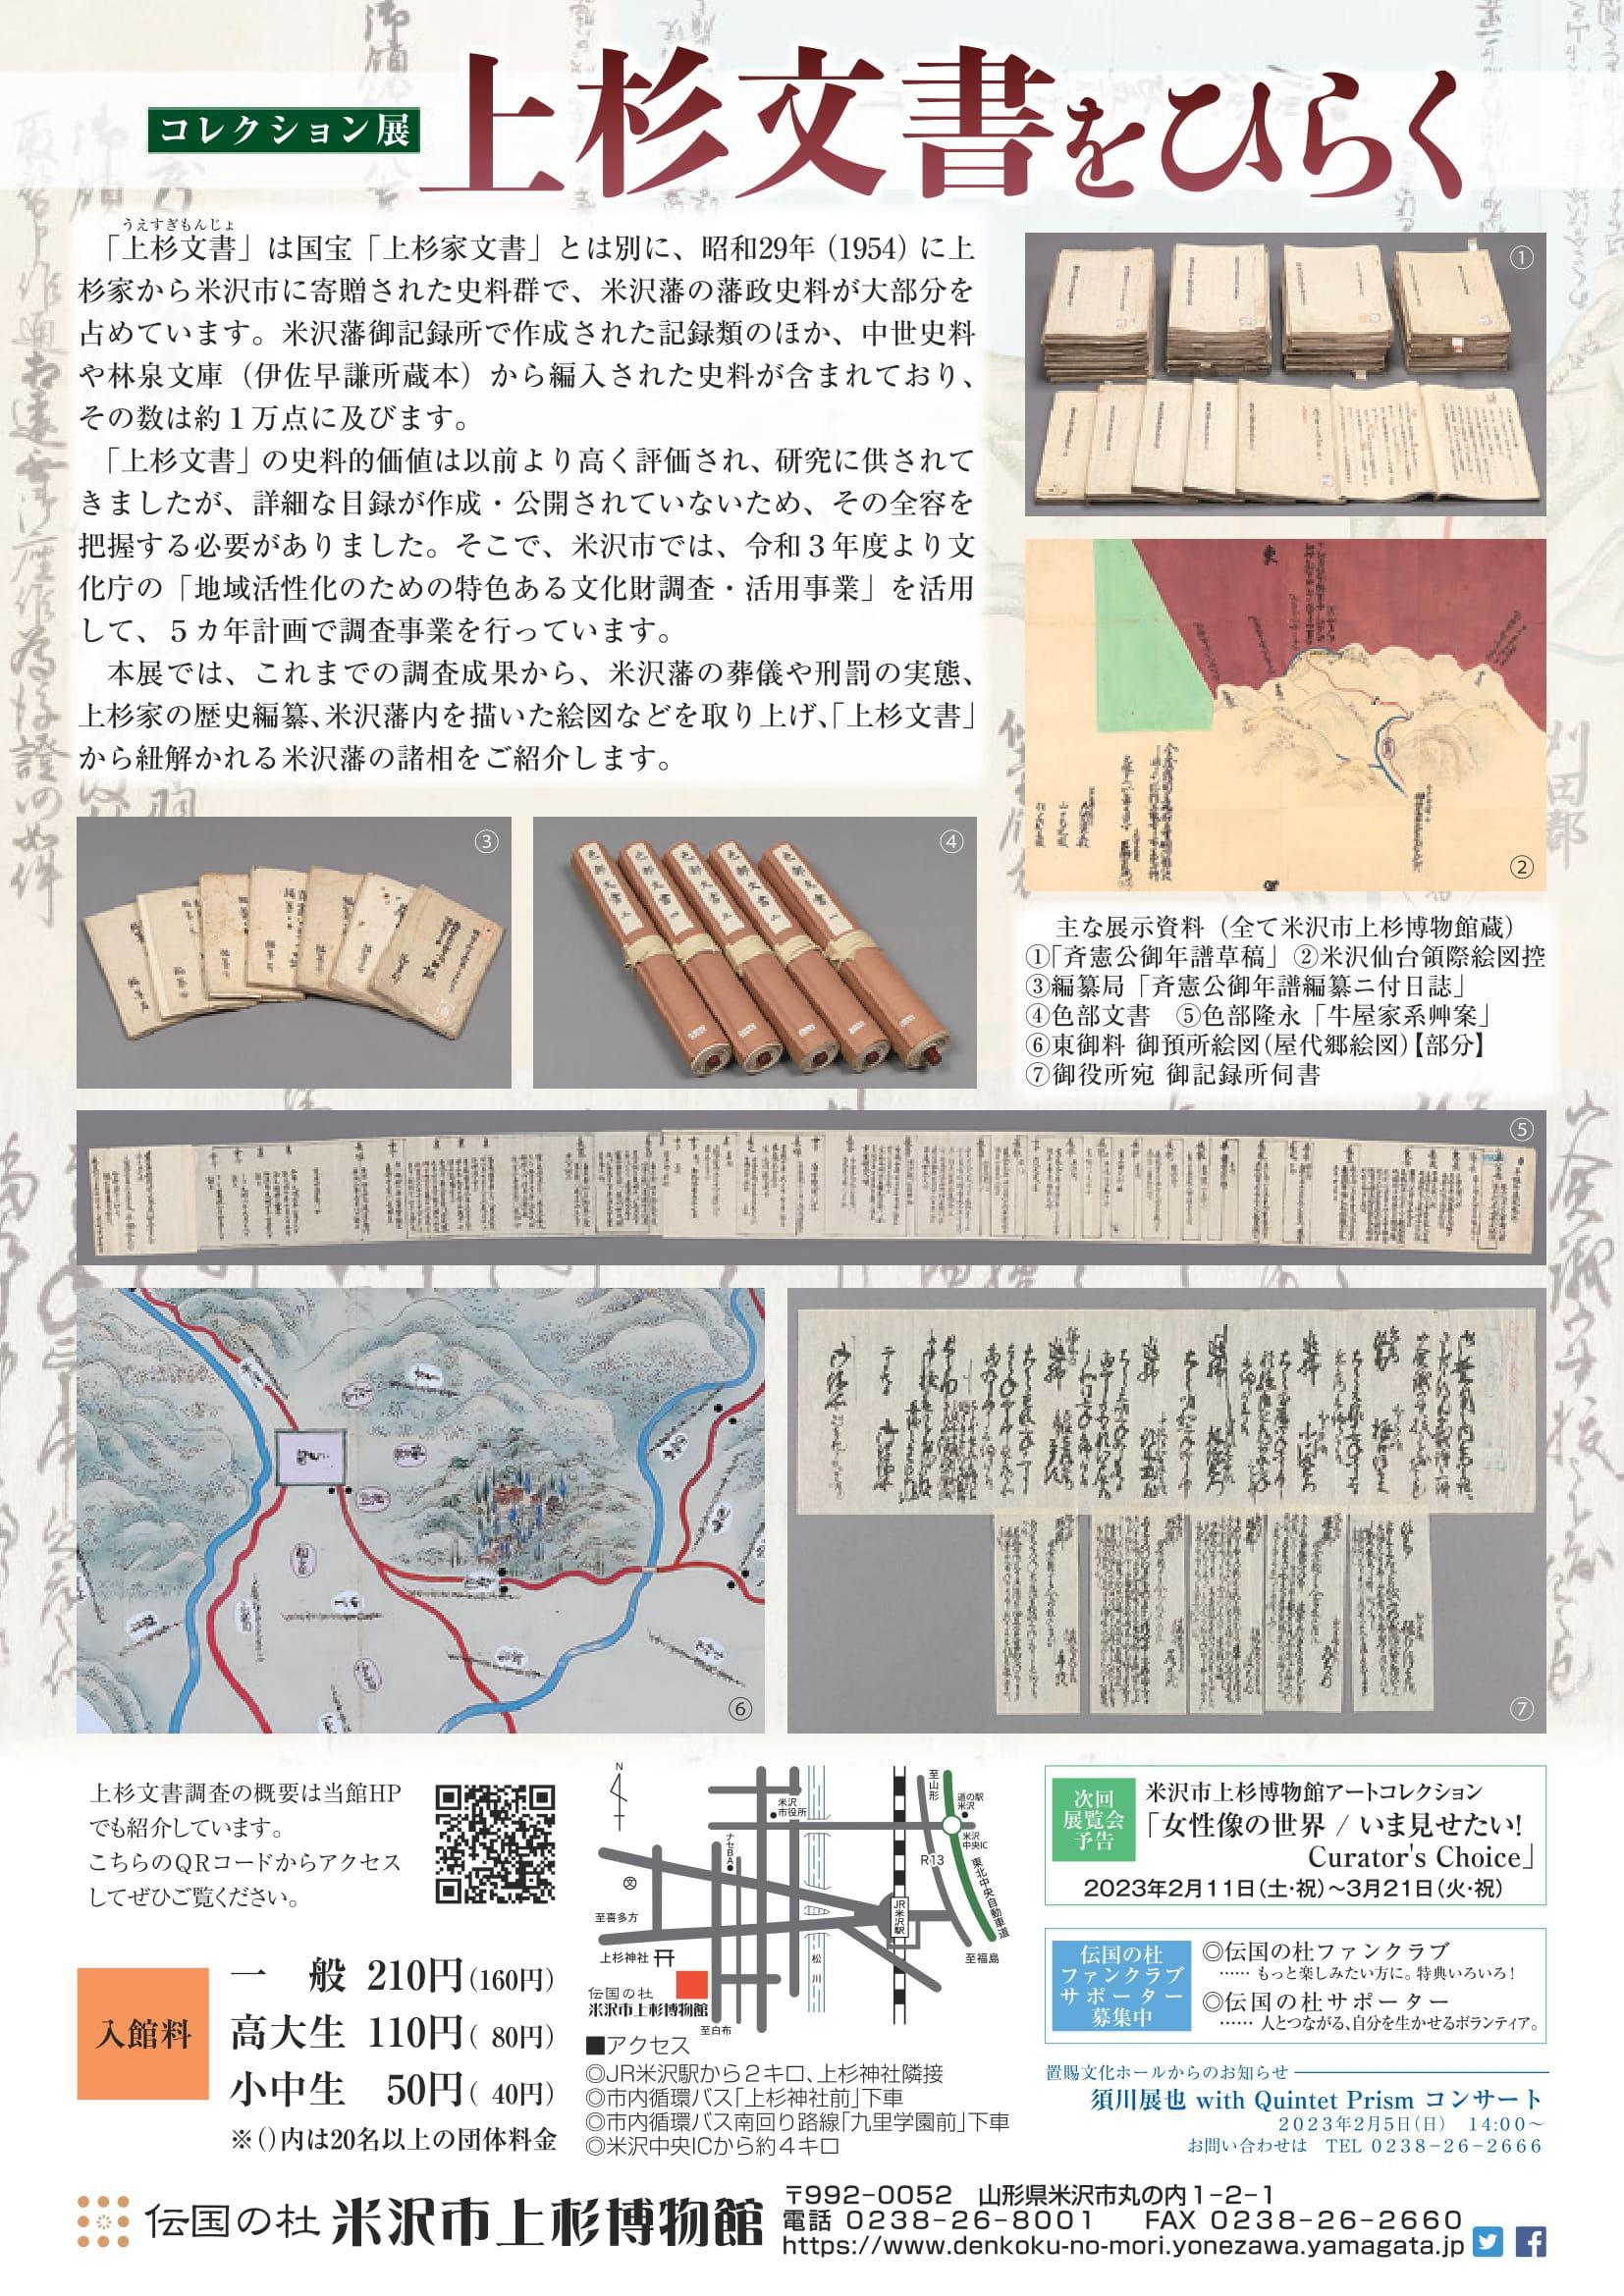 Yonezawa City Uesugi Museum Special Exhibit “Page through the Uesugi Records” (한국어・简体中文)